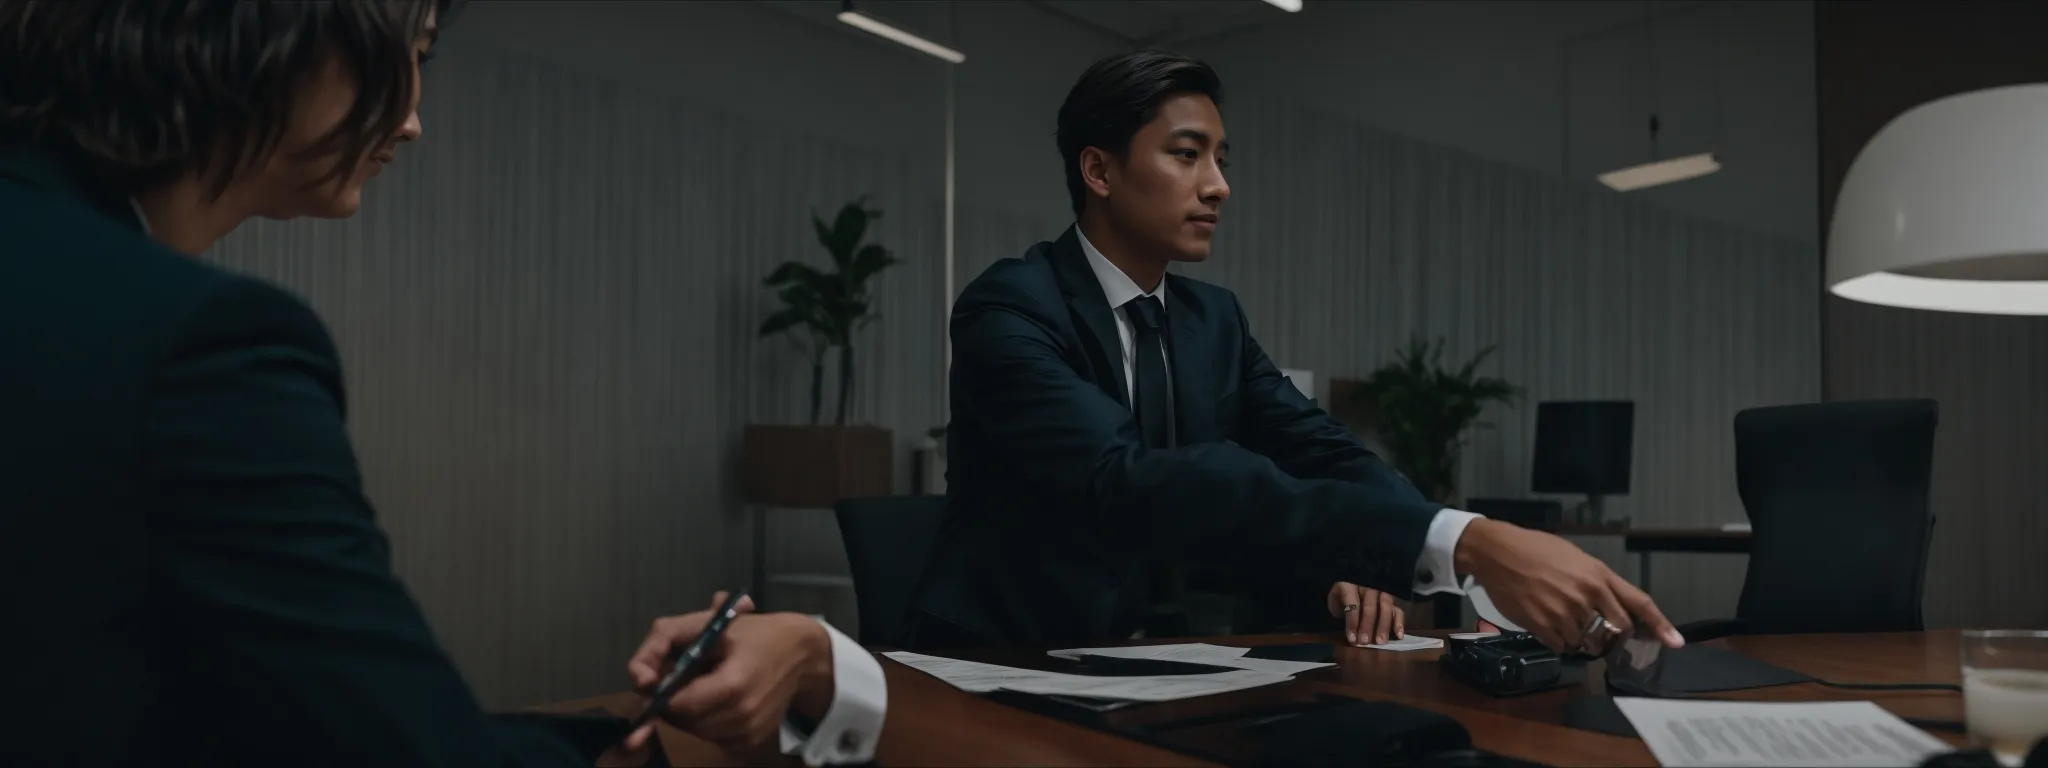 a person confidently shakes hands with an interviewer across a sleek, modern office desk.